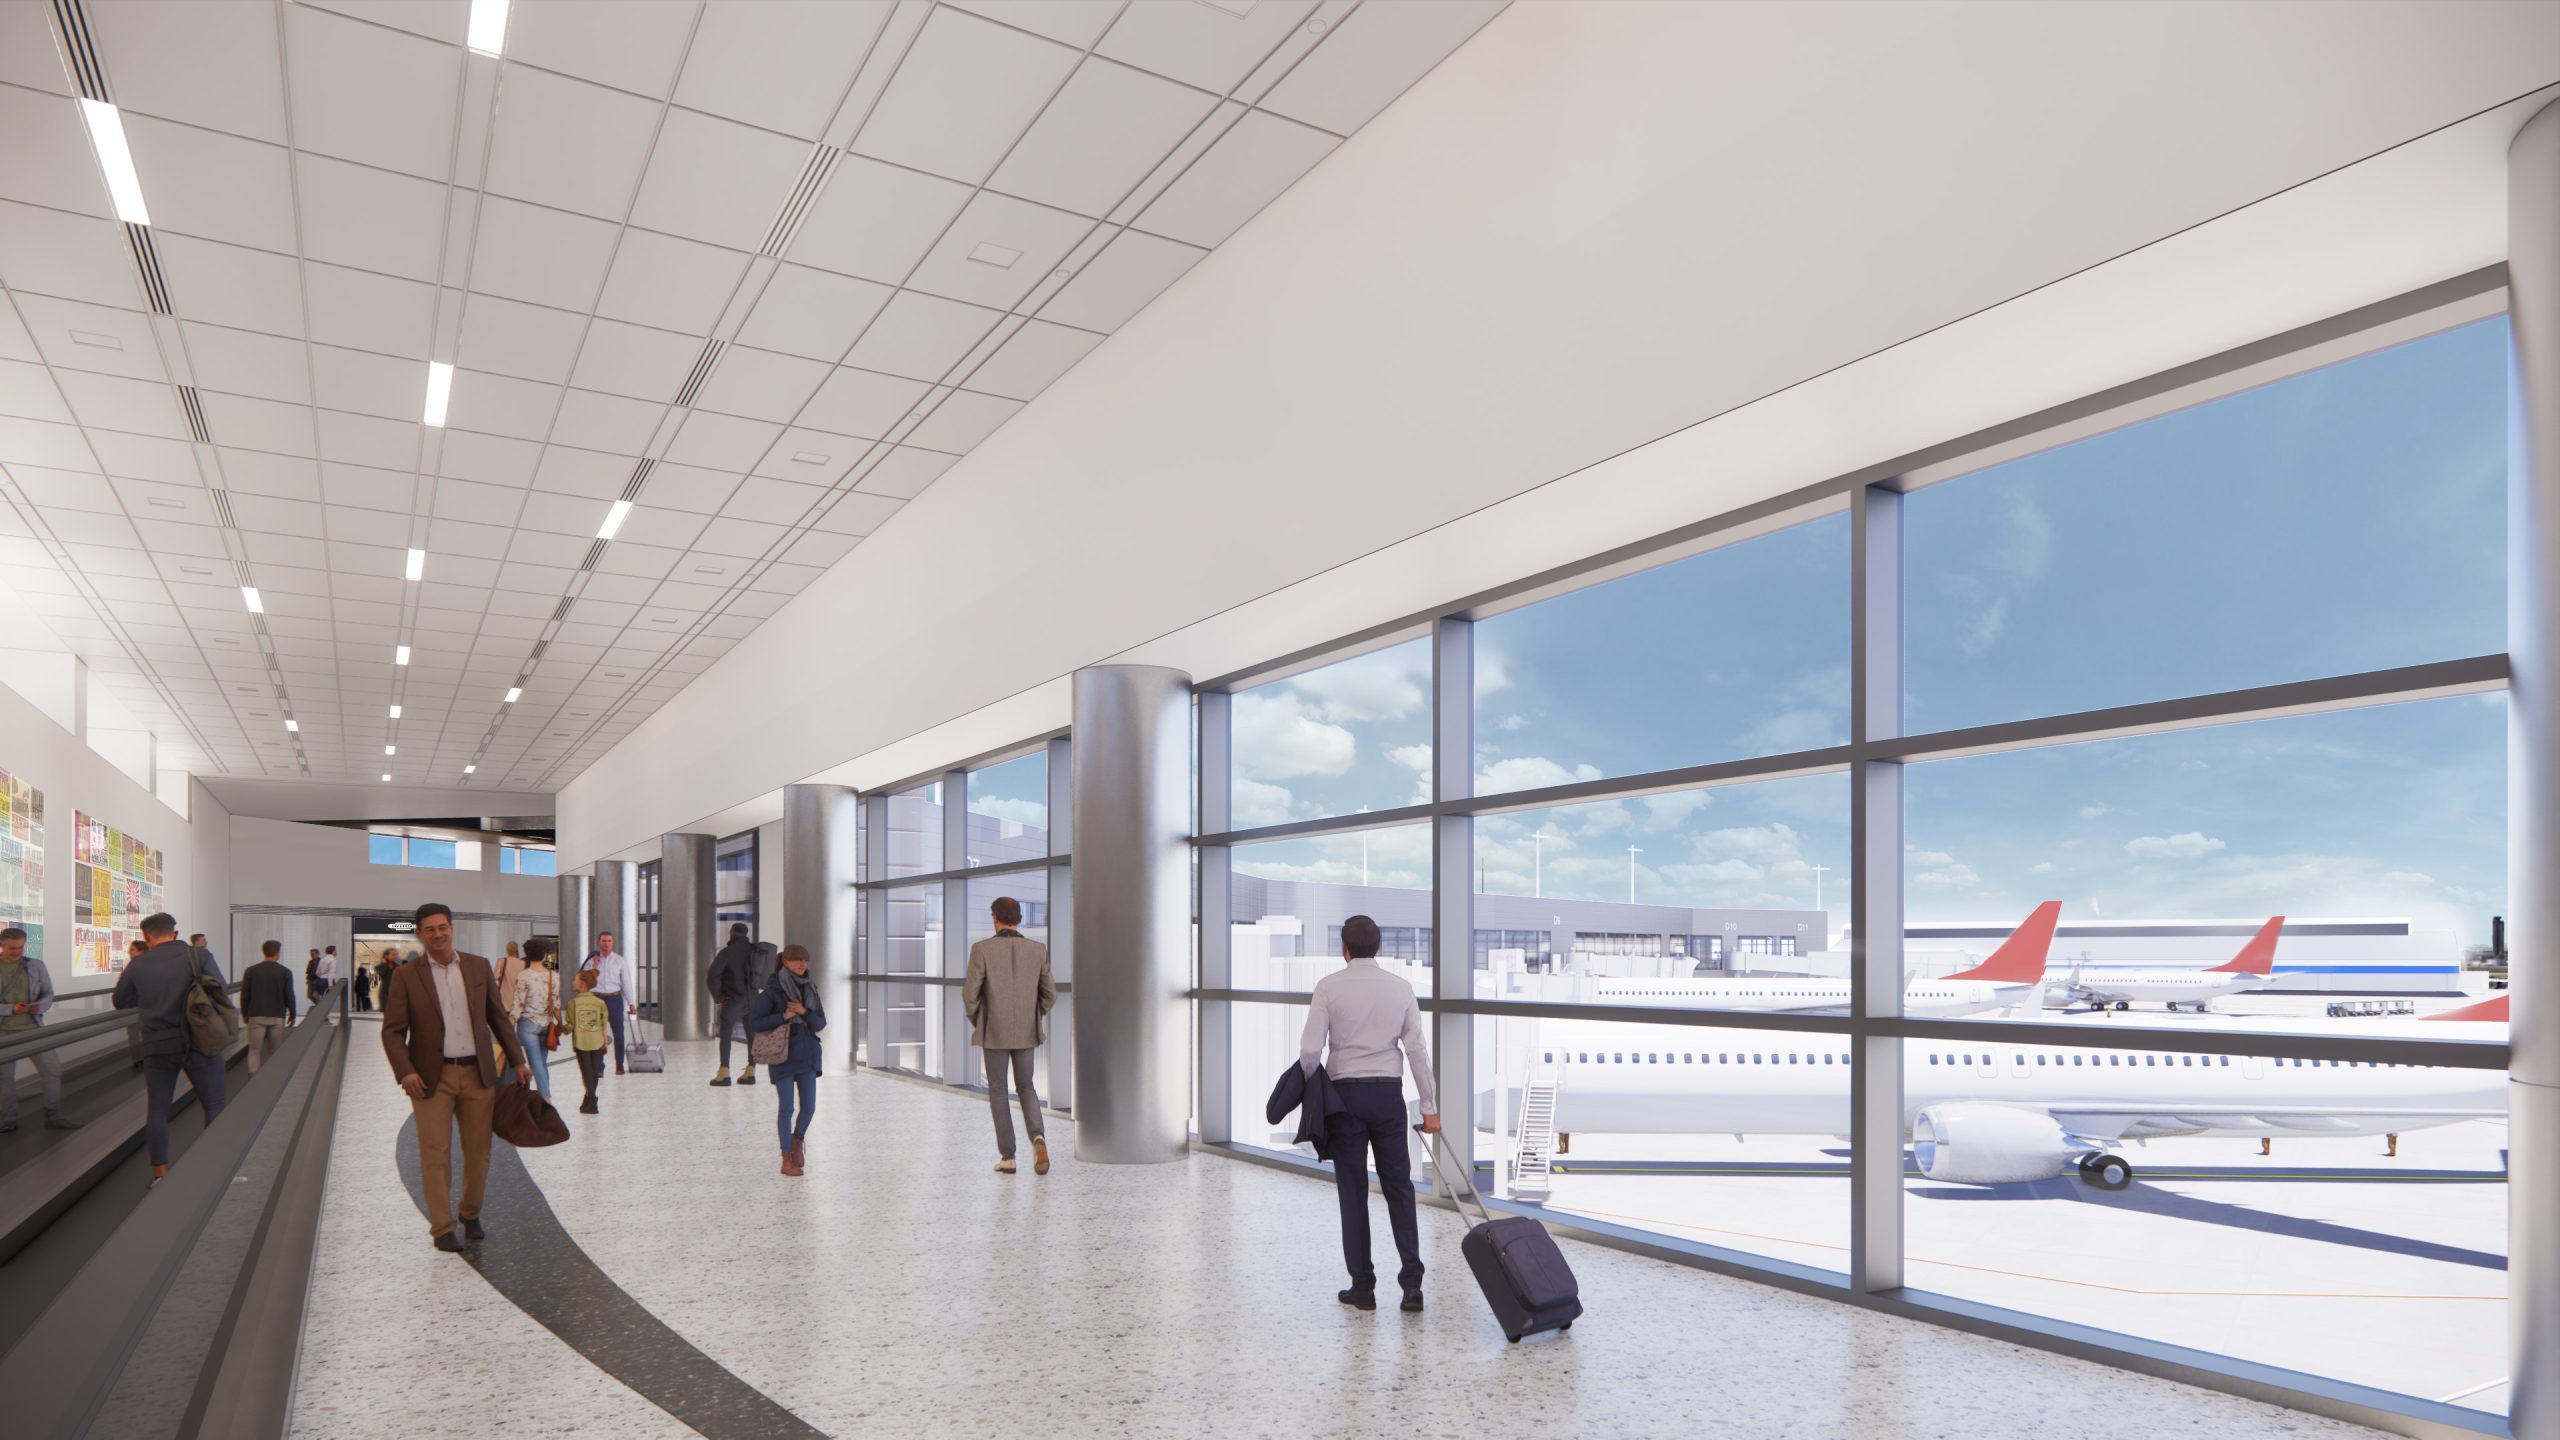 nashville airport new leasing opportunities fraport tenneessee